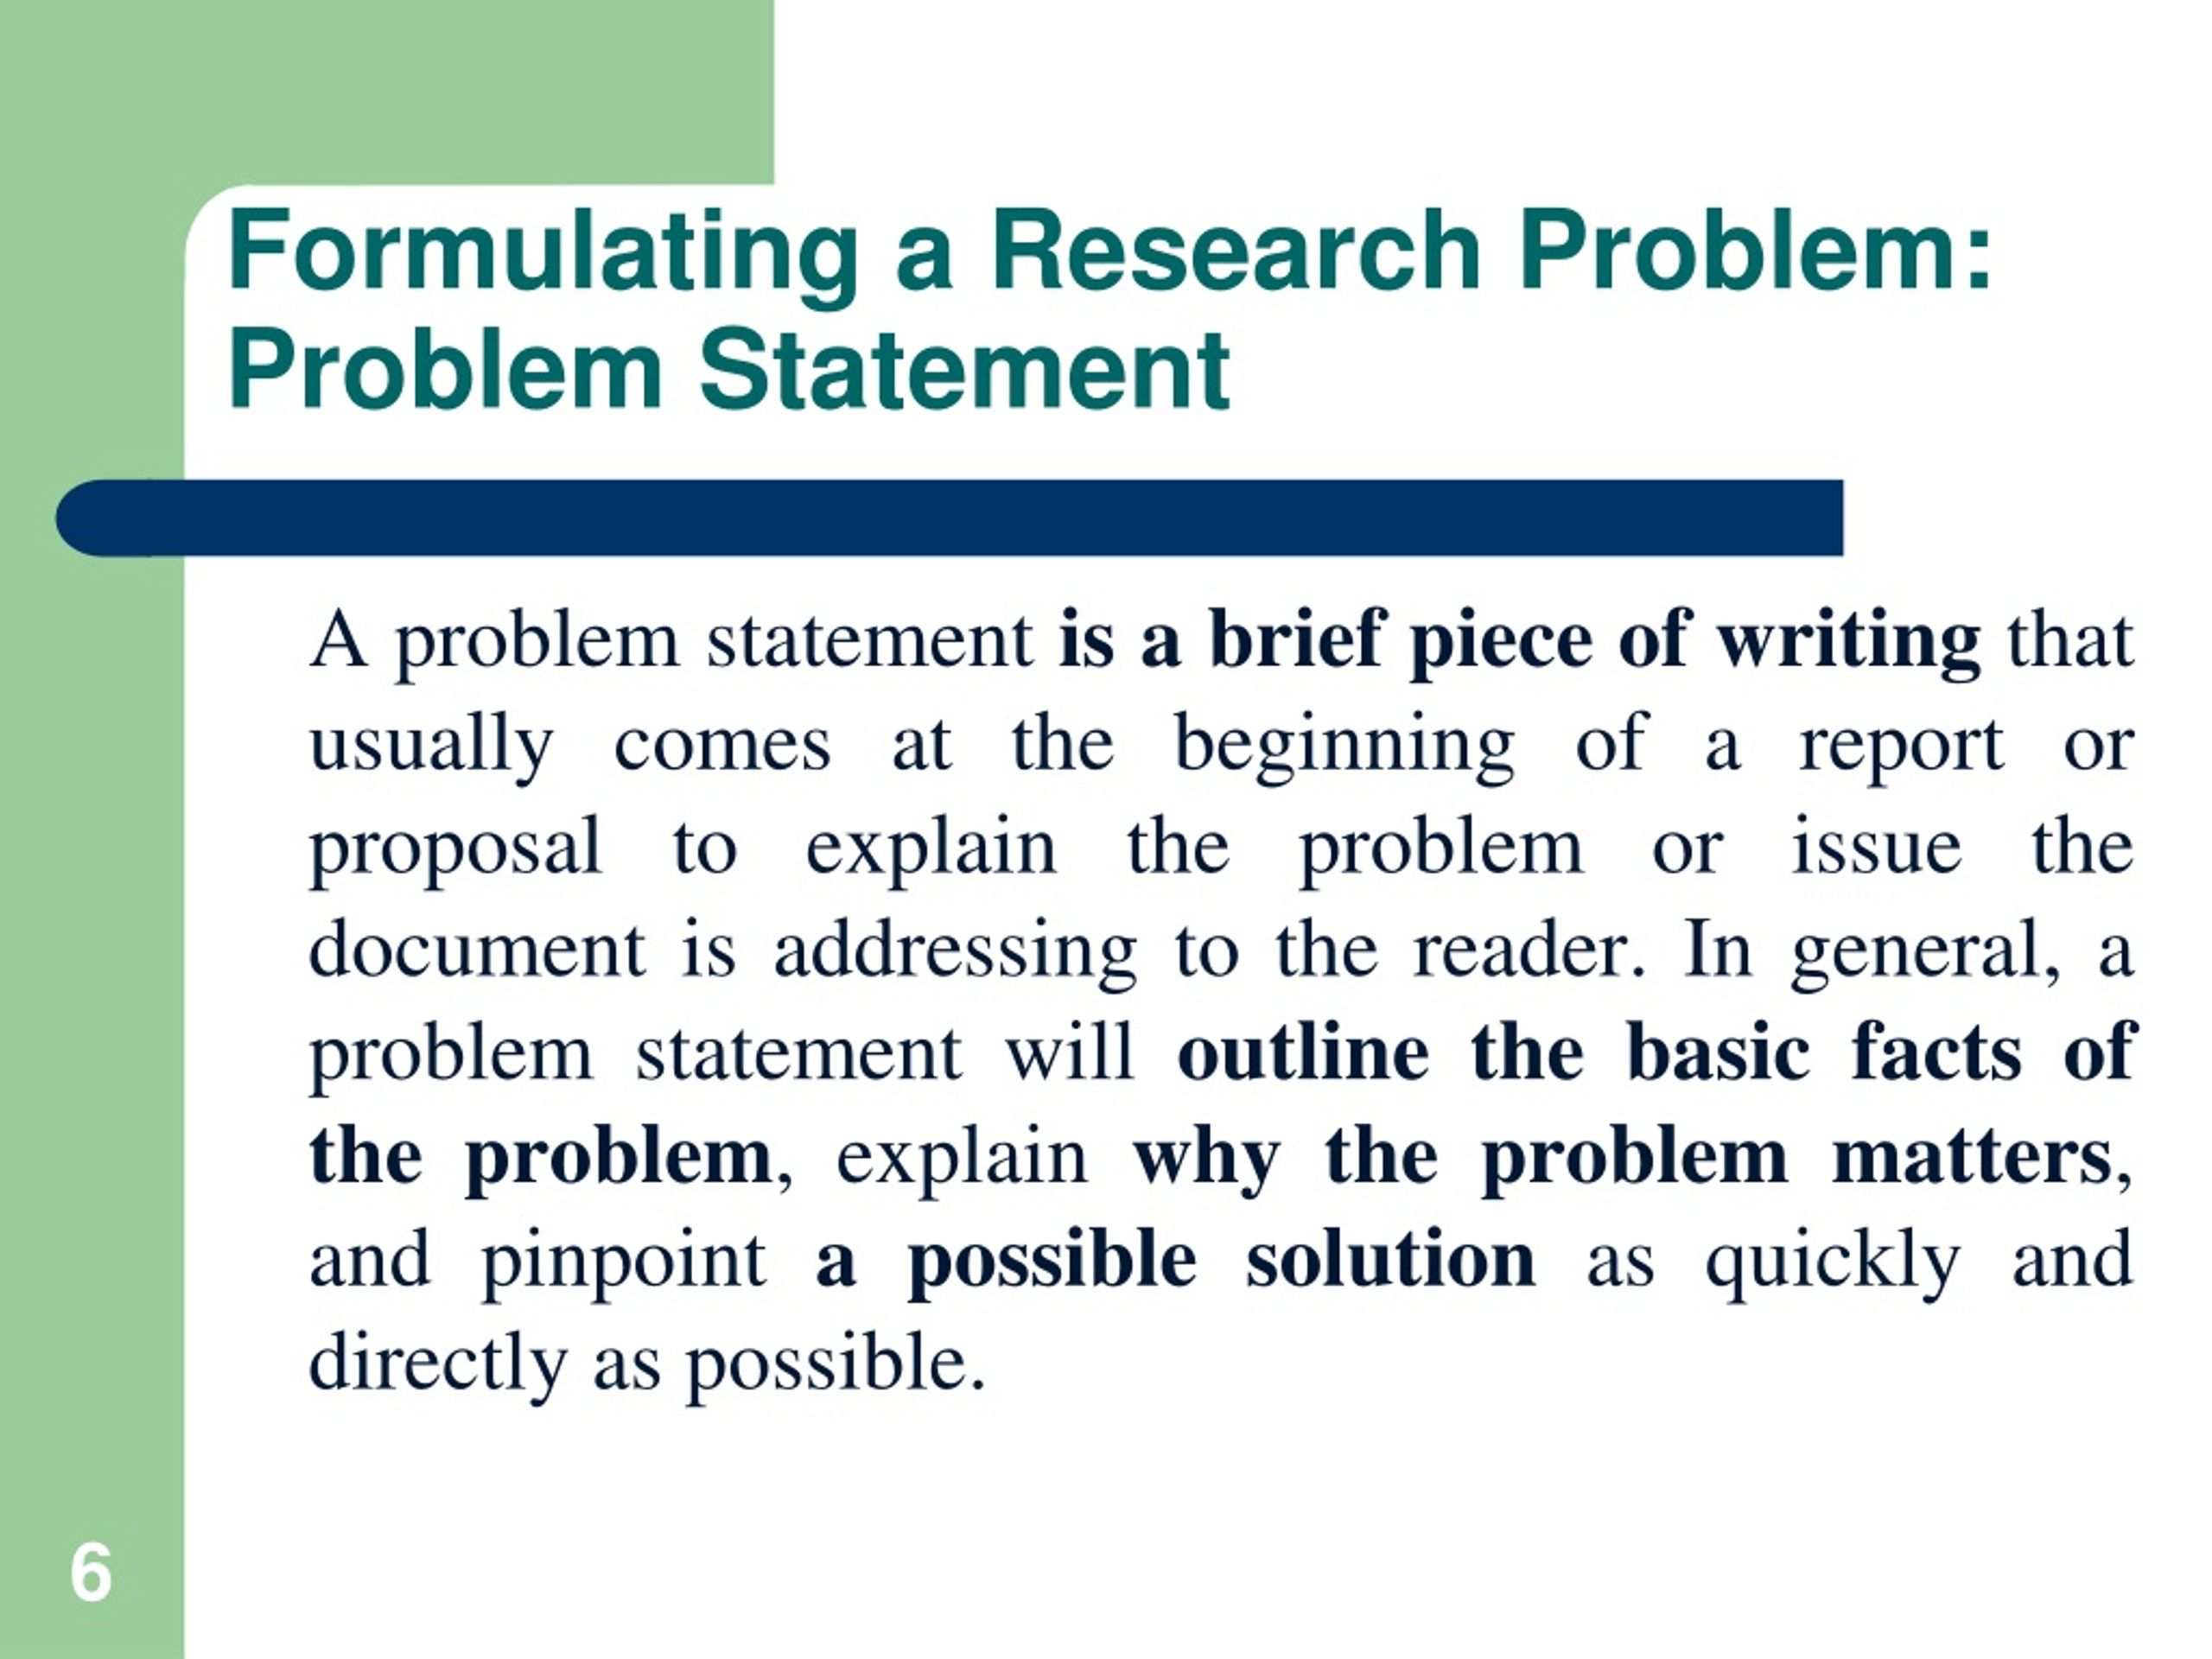 a problem statement in research